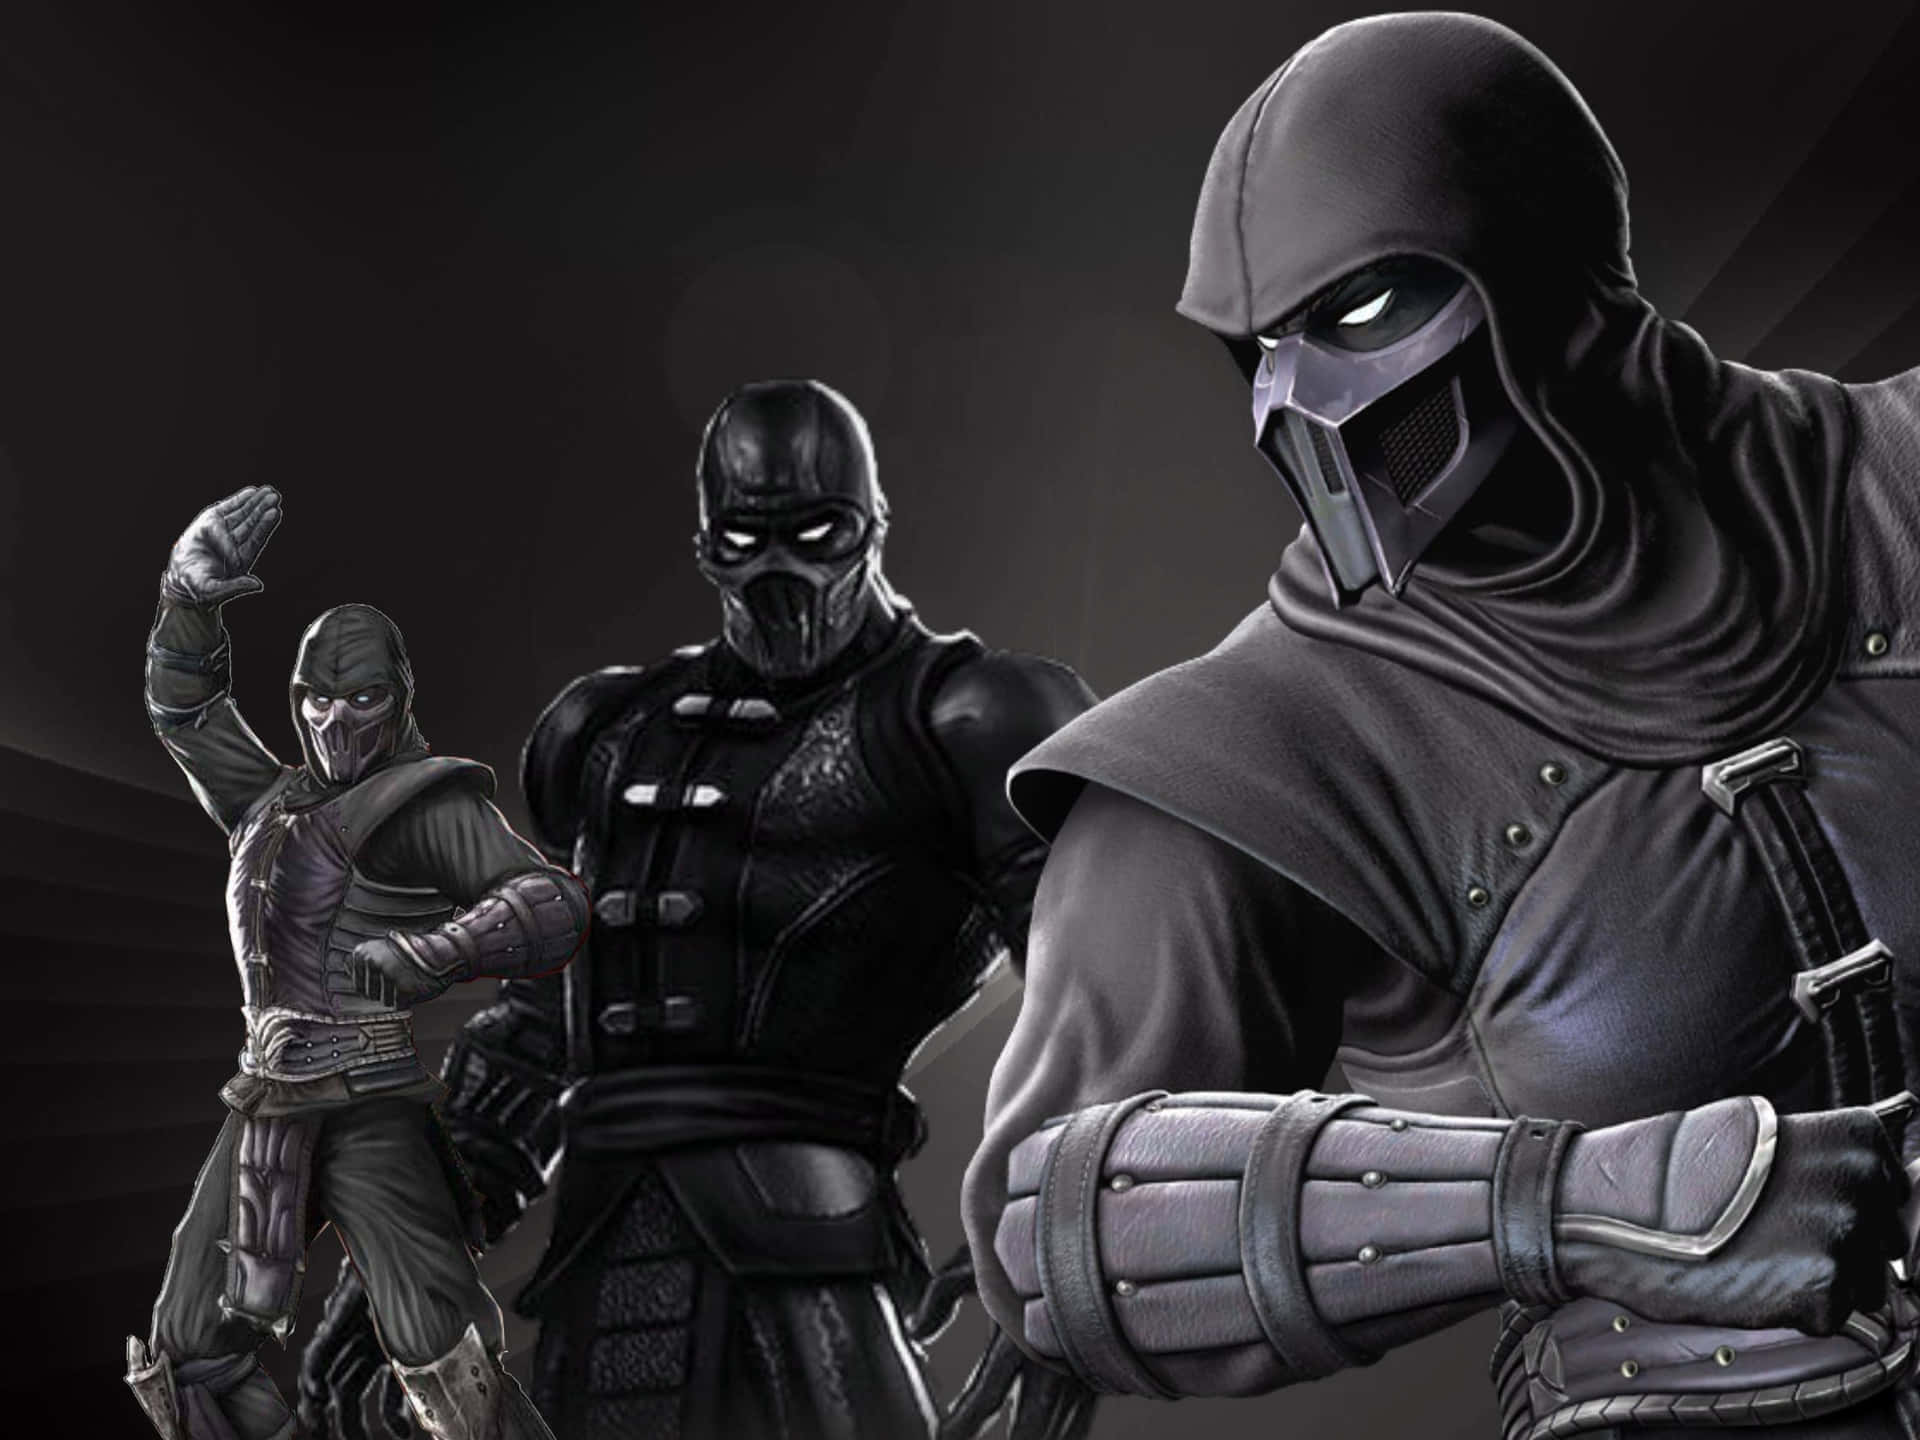 Noob Saibot unleashes shadows in Mortal Kombat Wallpaper